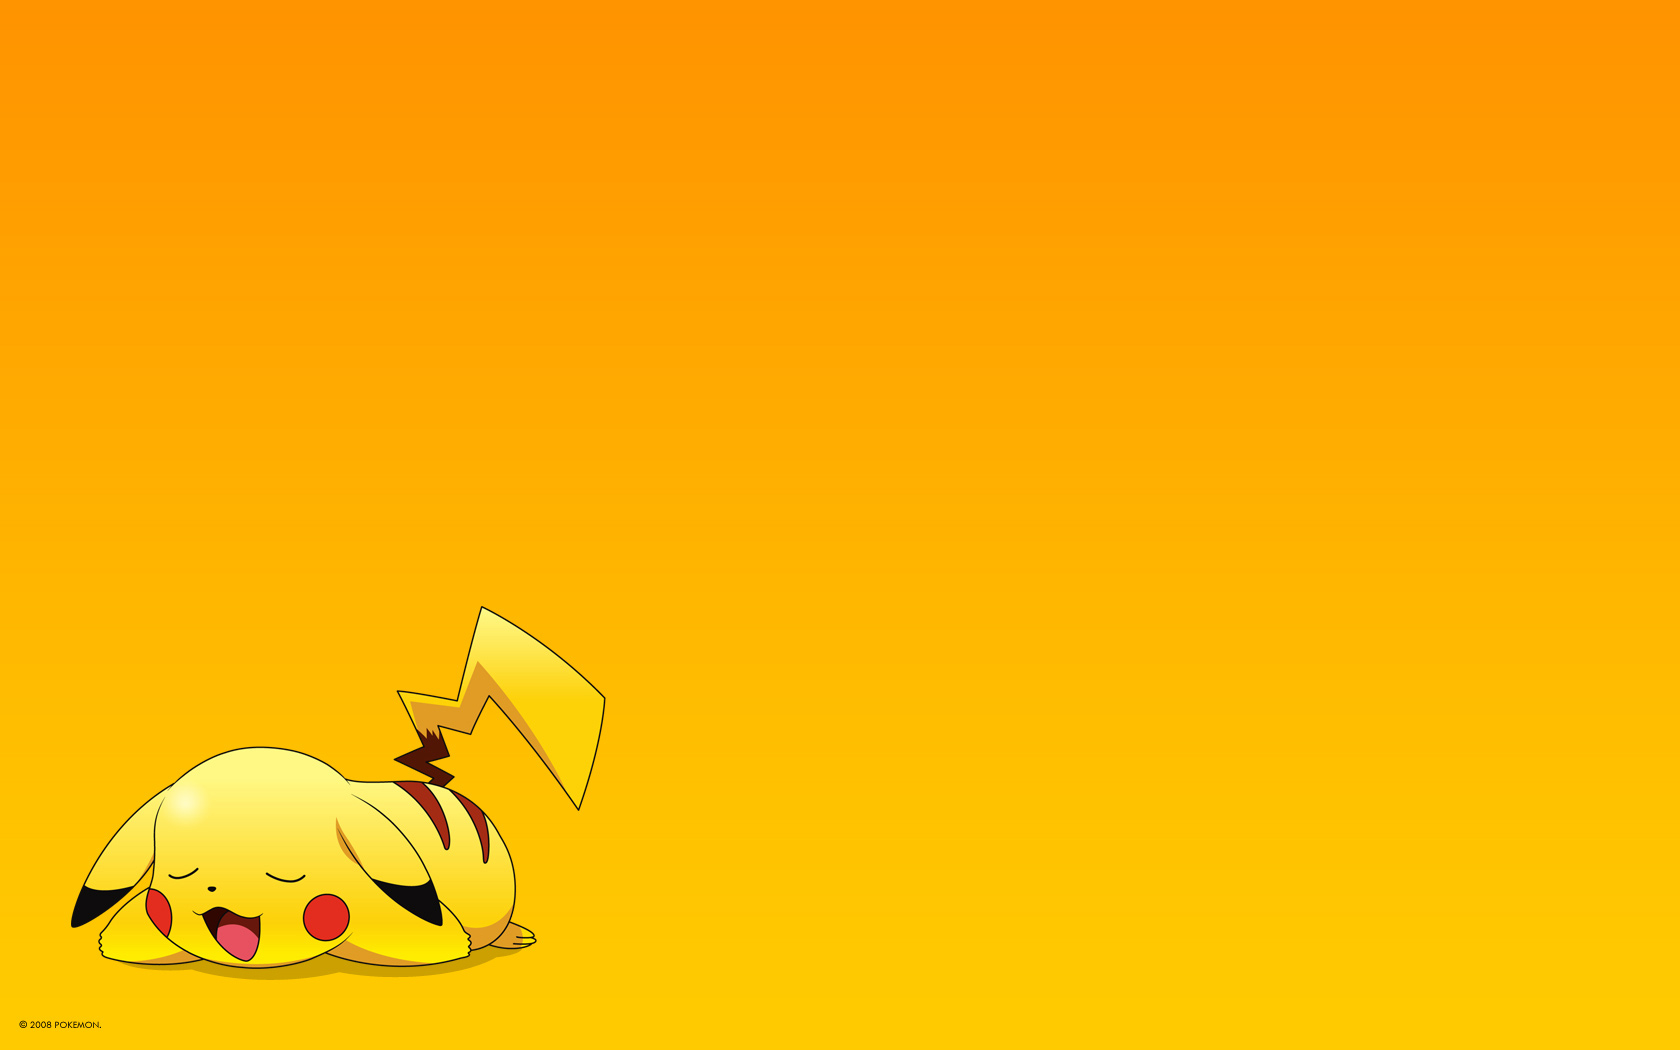 76+] Pikachu Background - WallpaperSafari